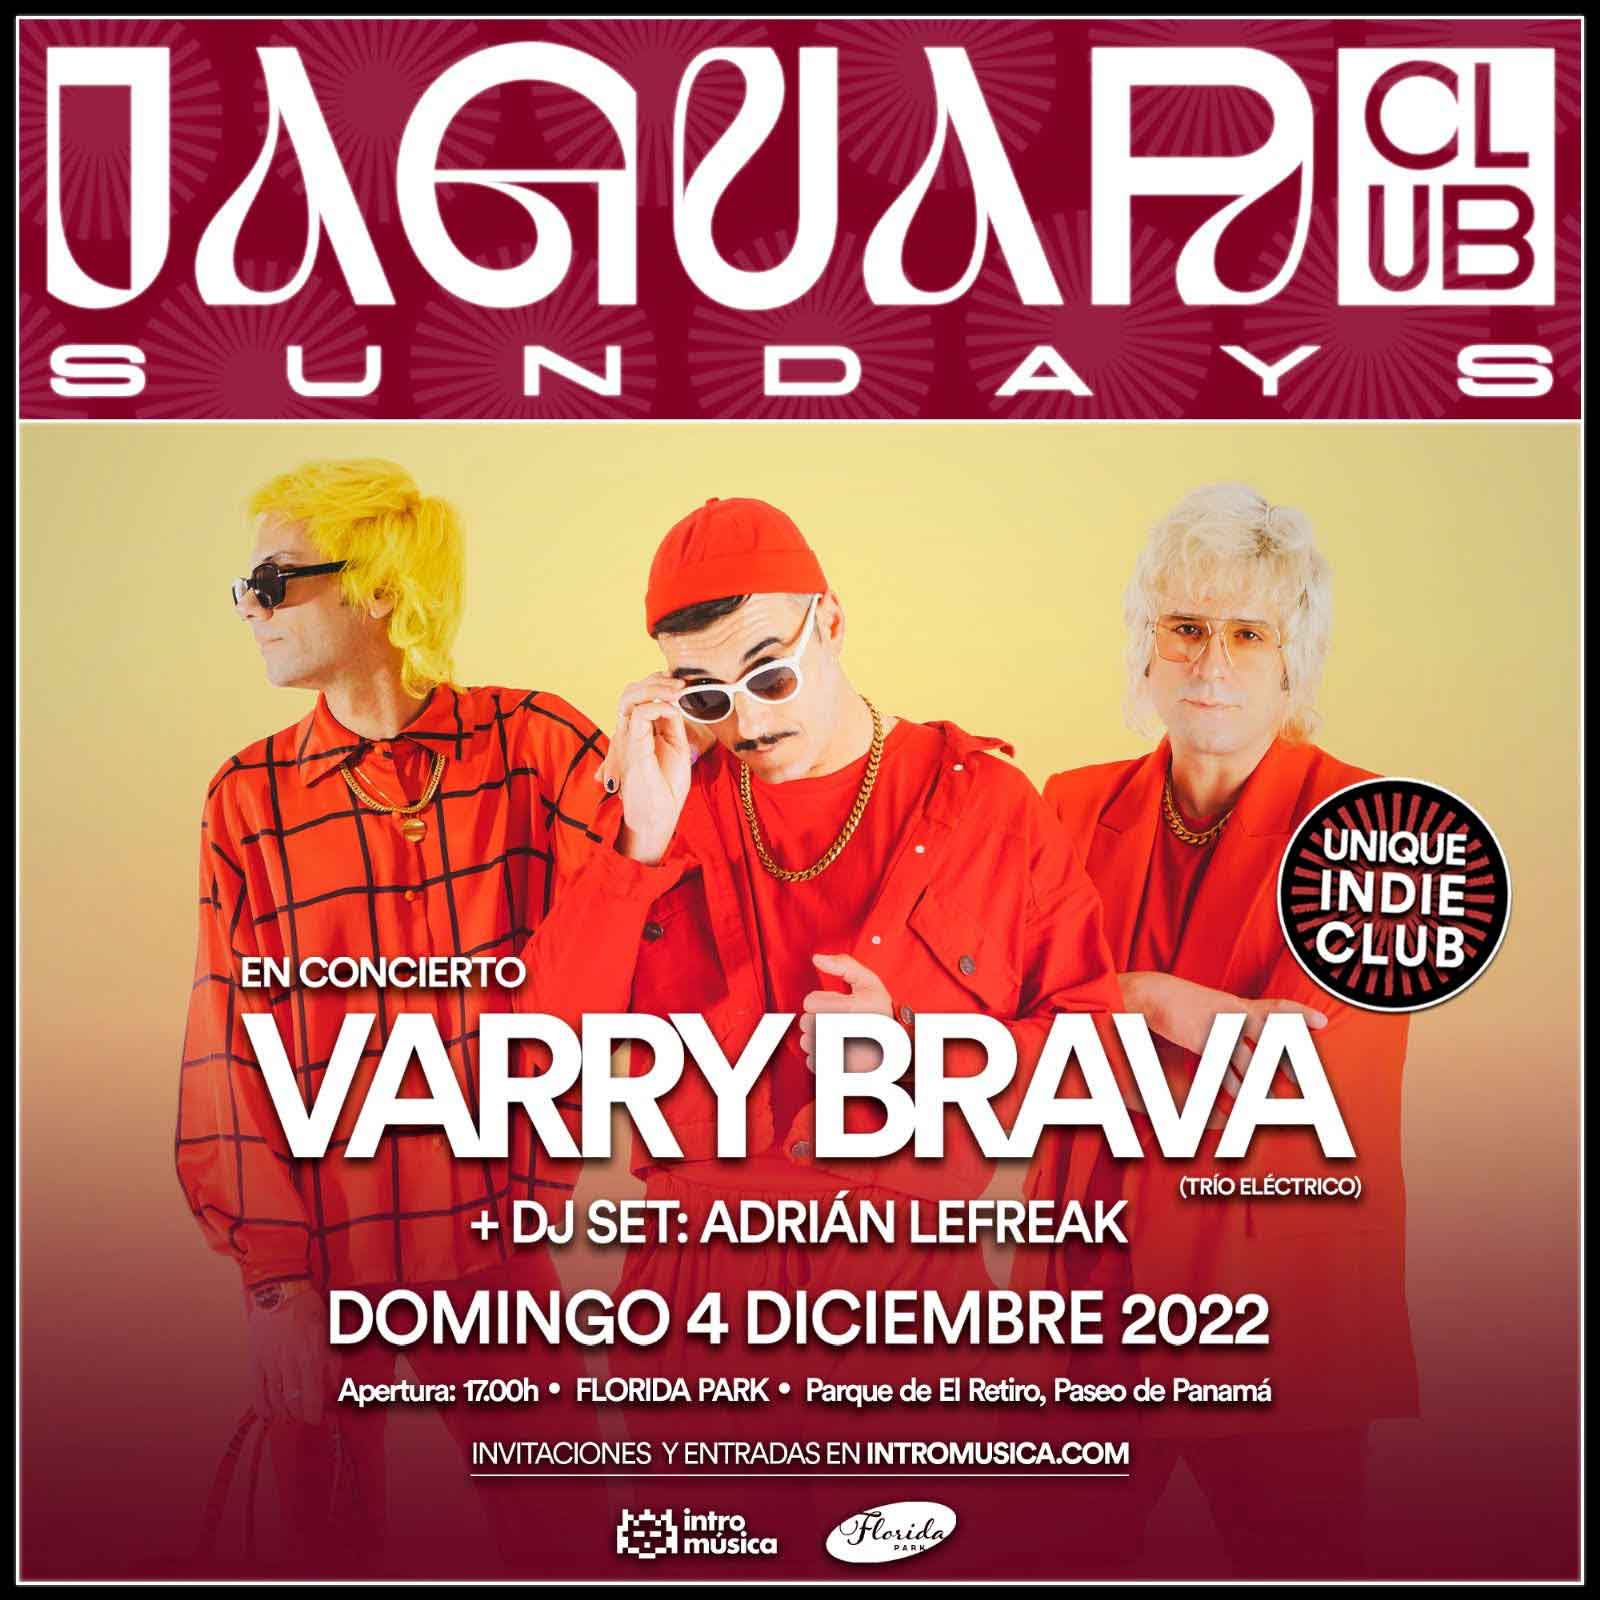 barry-brava-jaguar-club-sundays